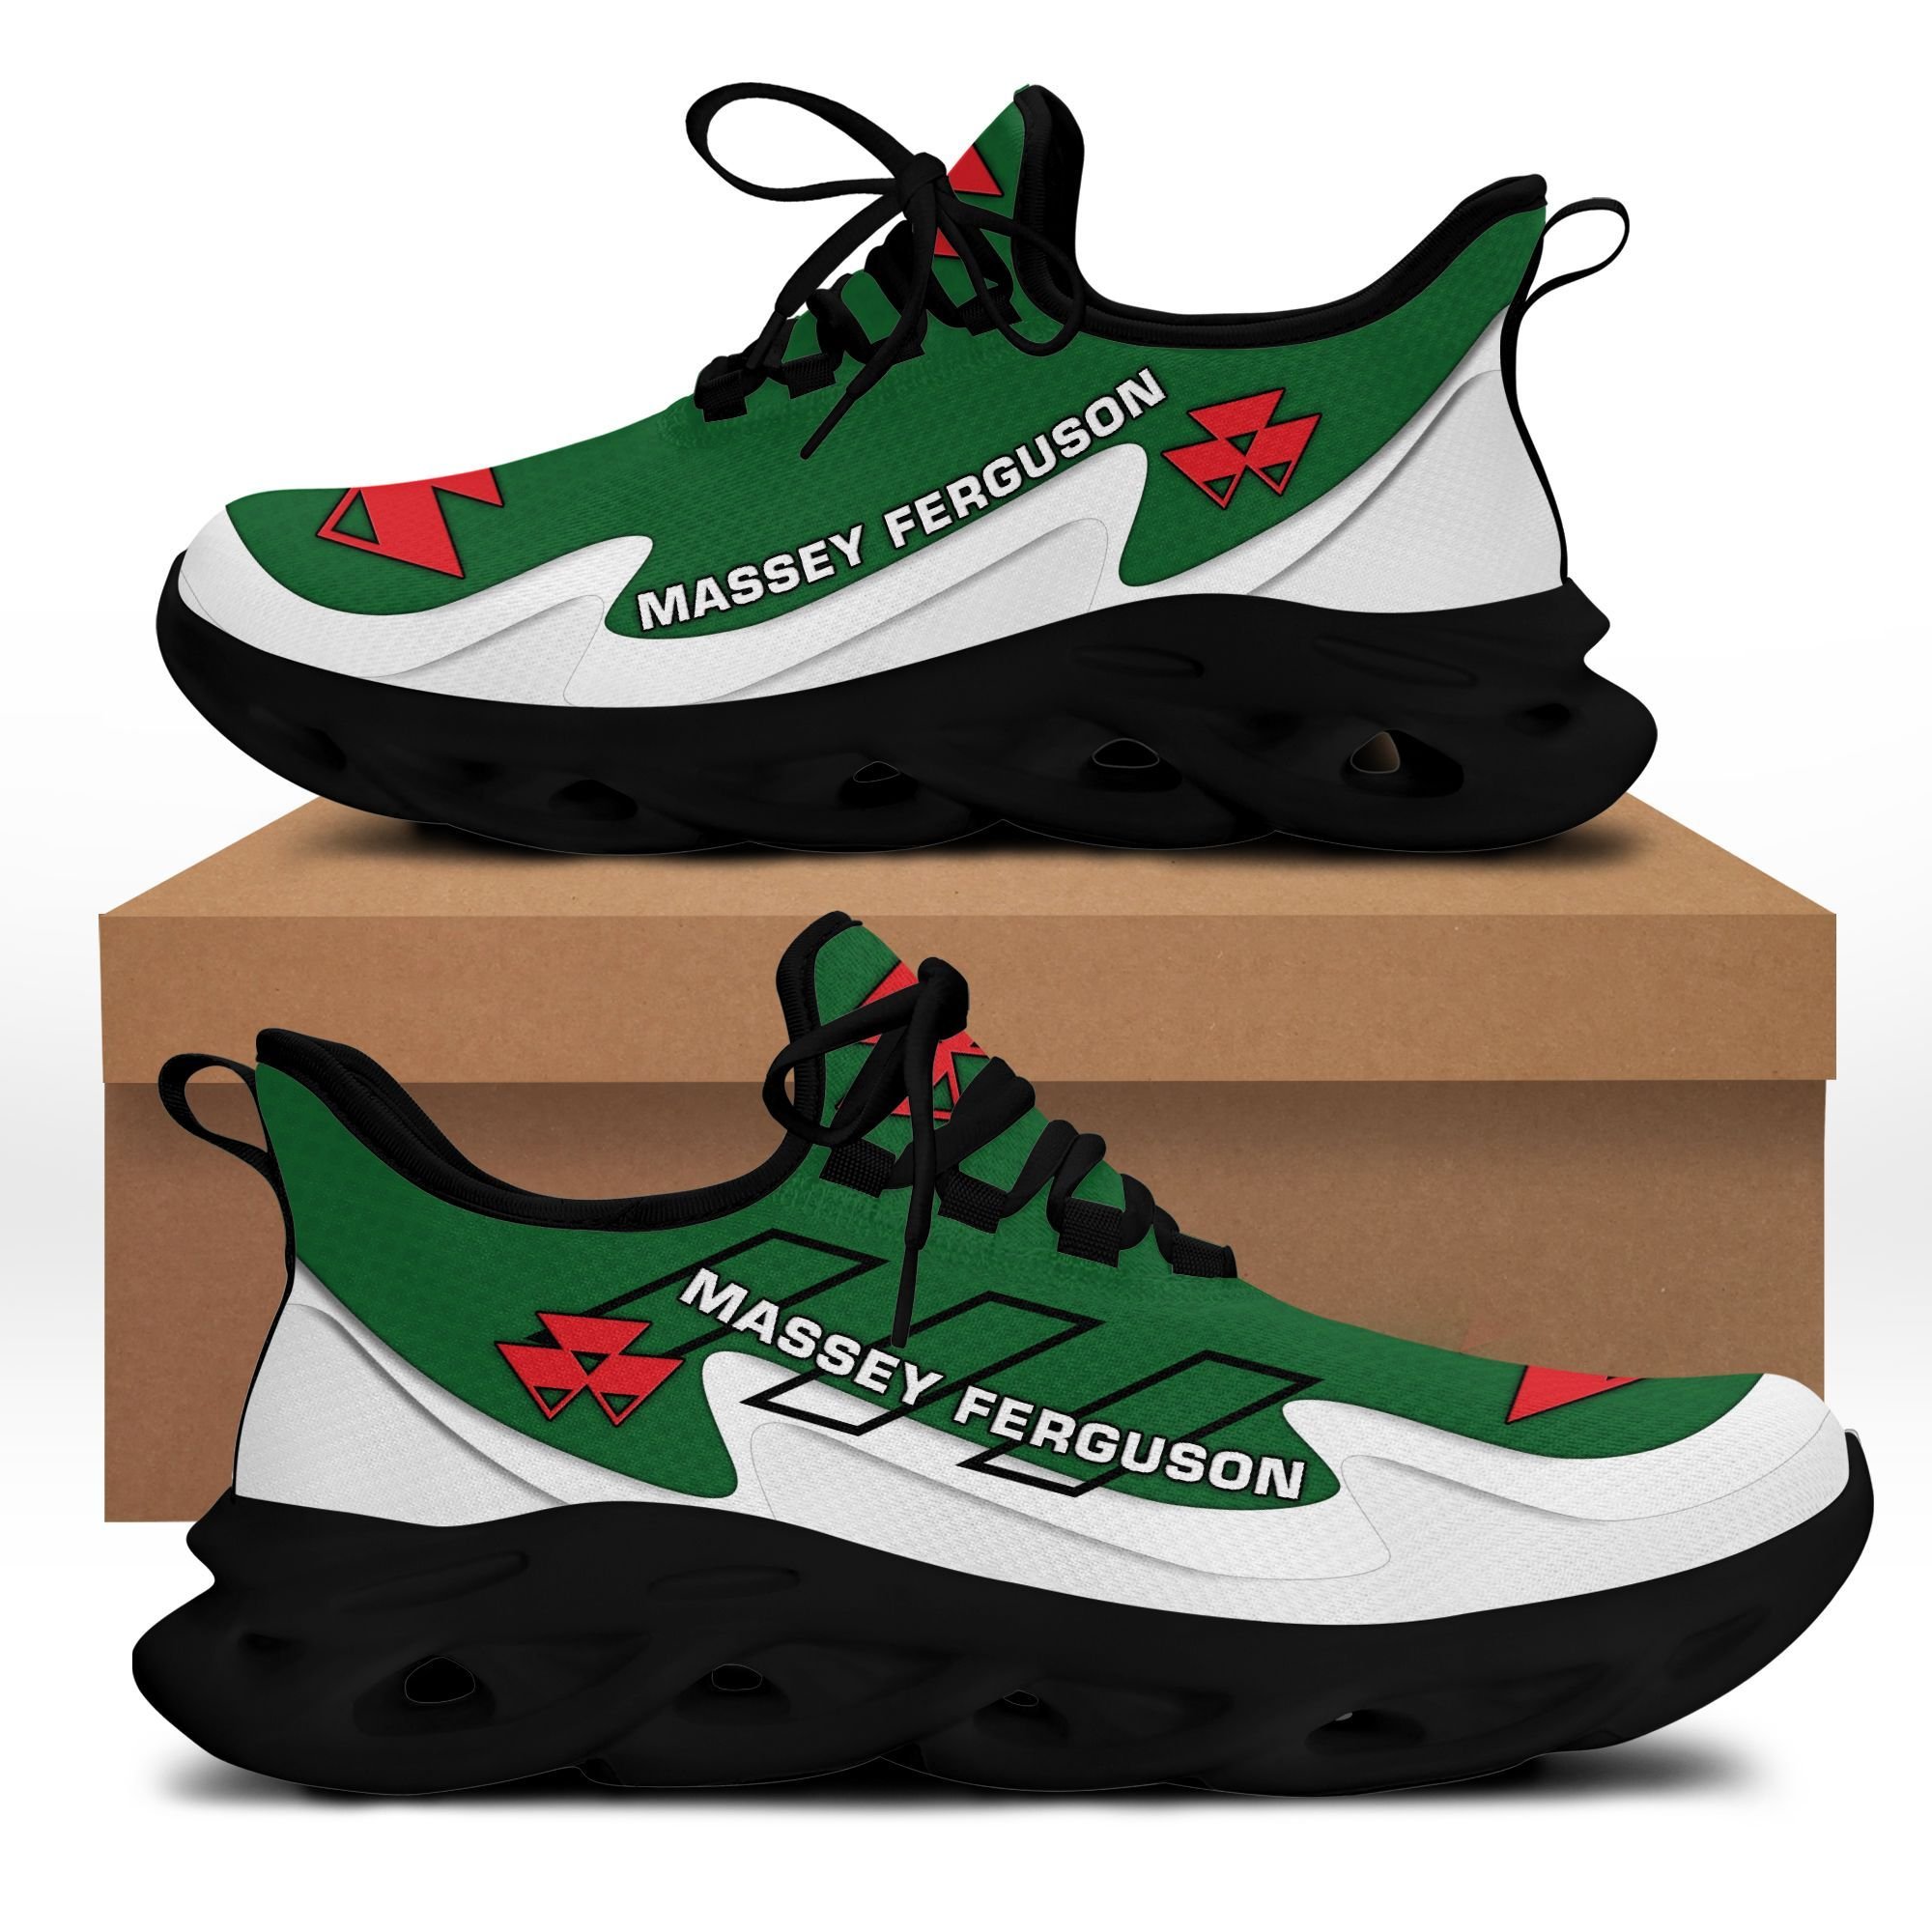 Massey Ferguson Dvt-Ht Bs Running Shoes Ver 1 (Green) – Ride Clothing Shop